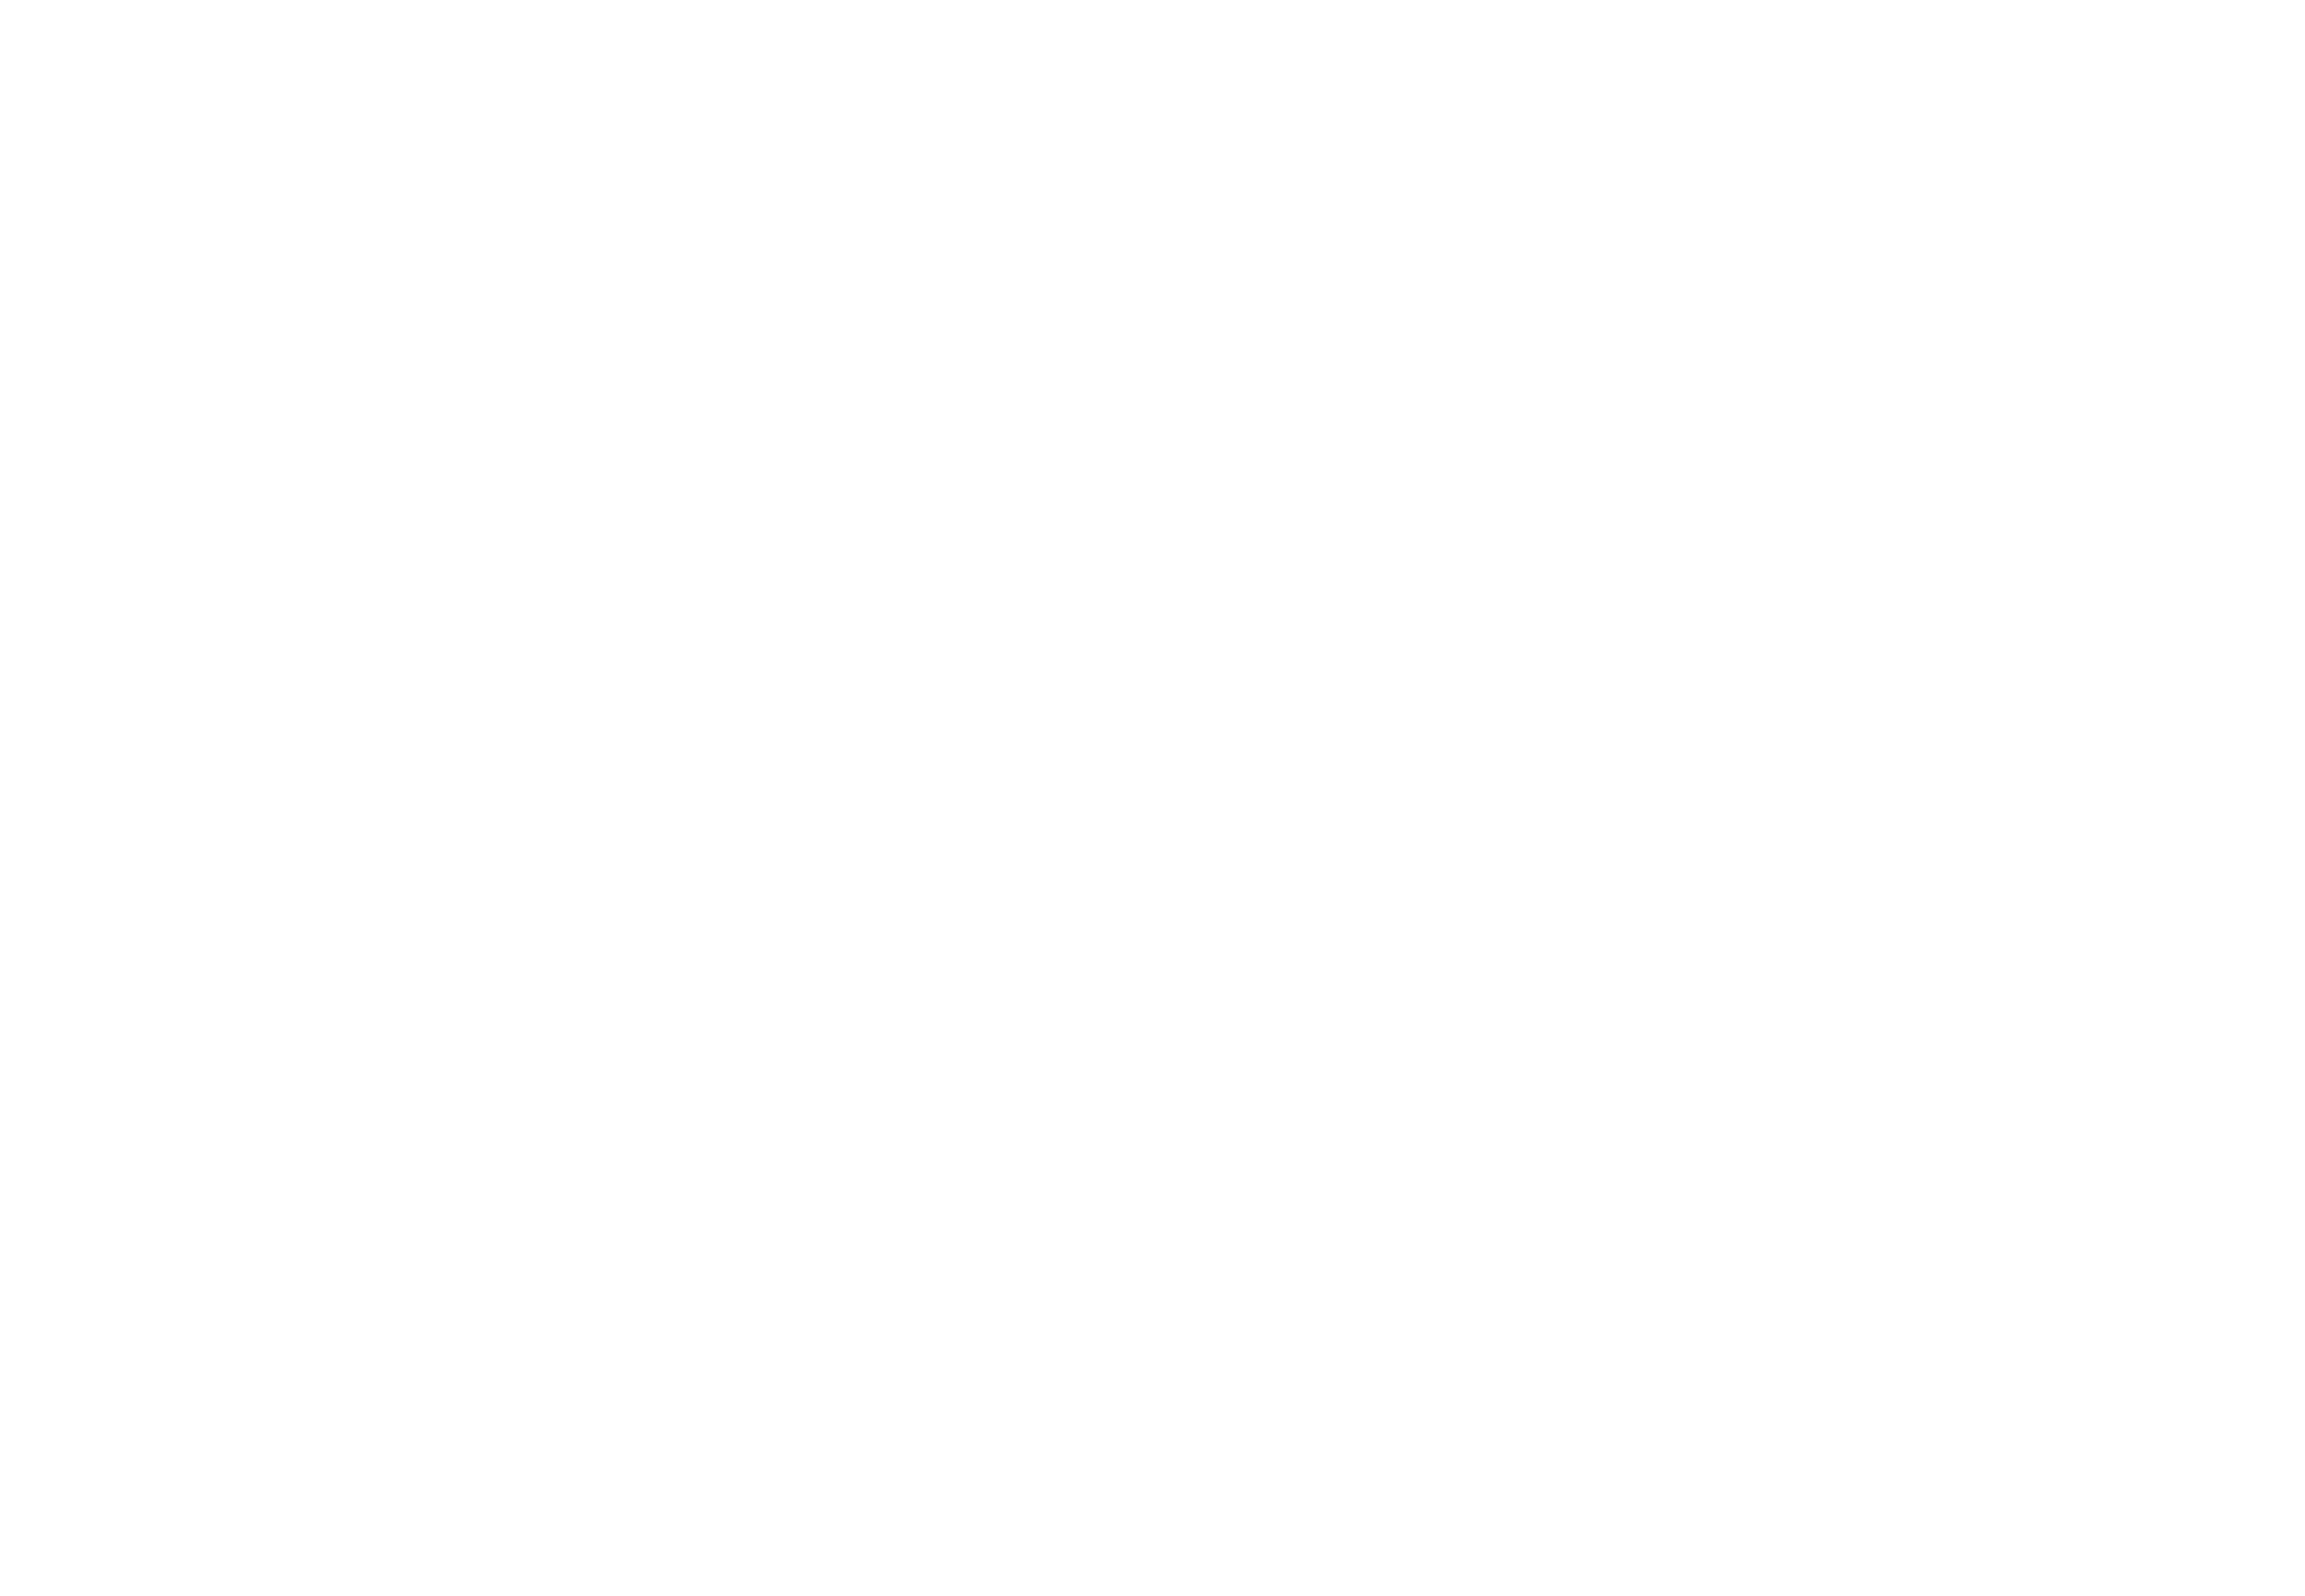 JD Willis